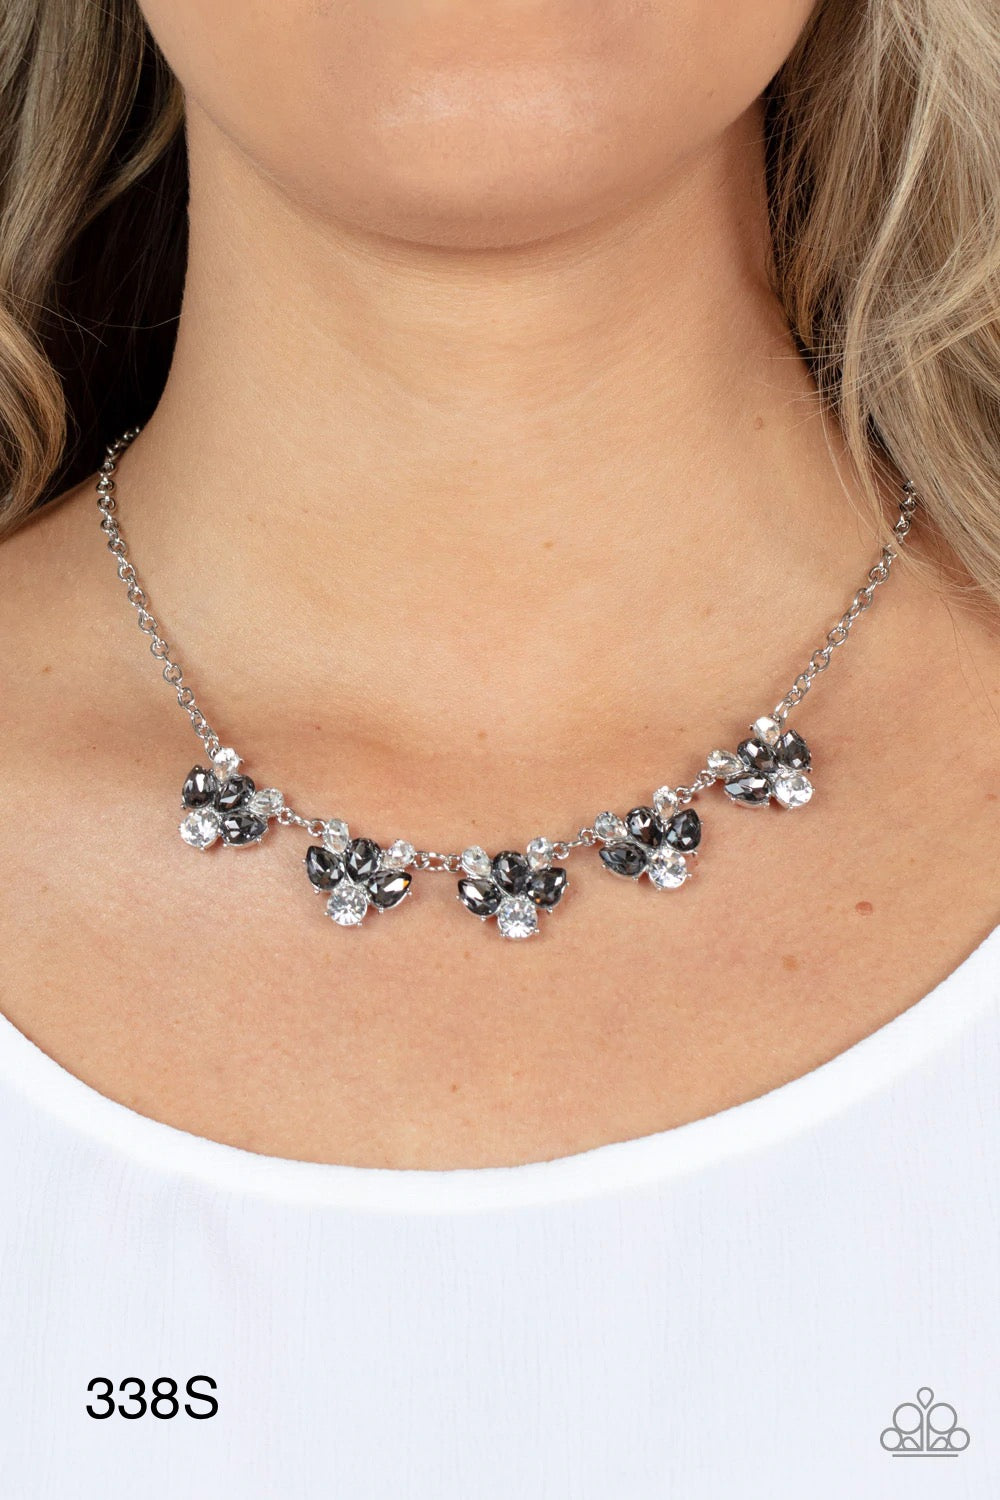 Paparazzi “Envious Elegance” Silver Necklace Earring Set